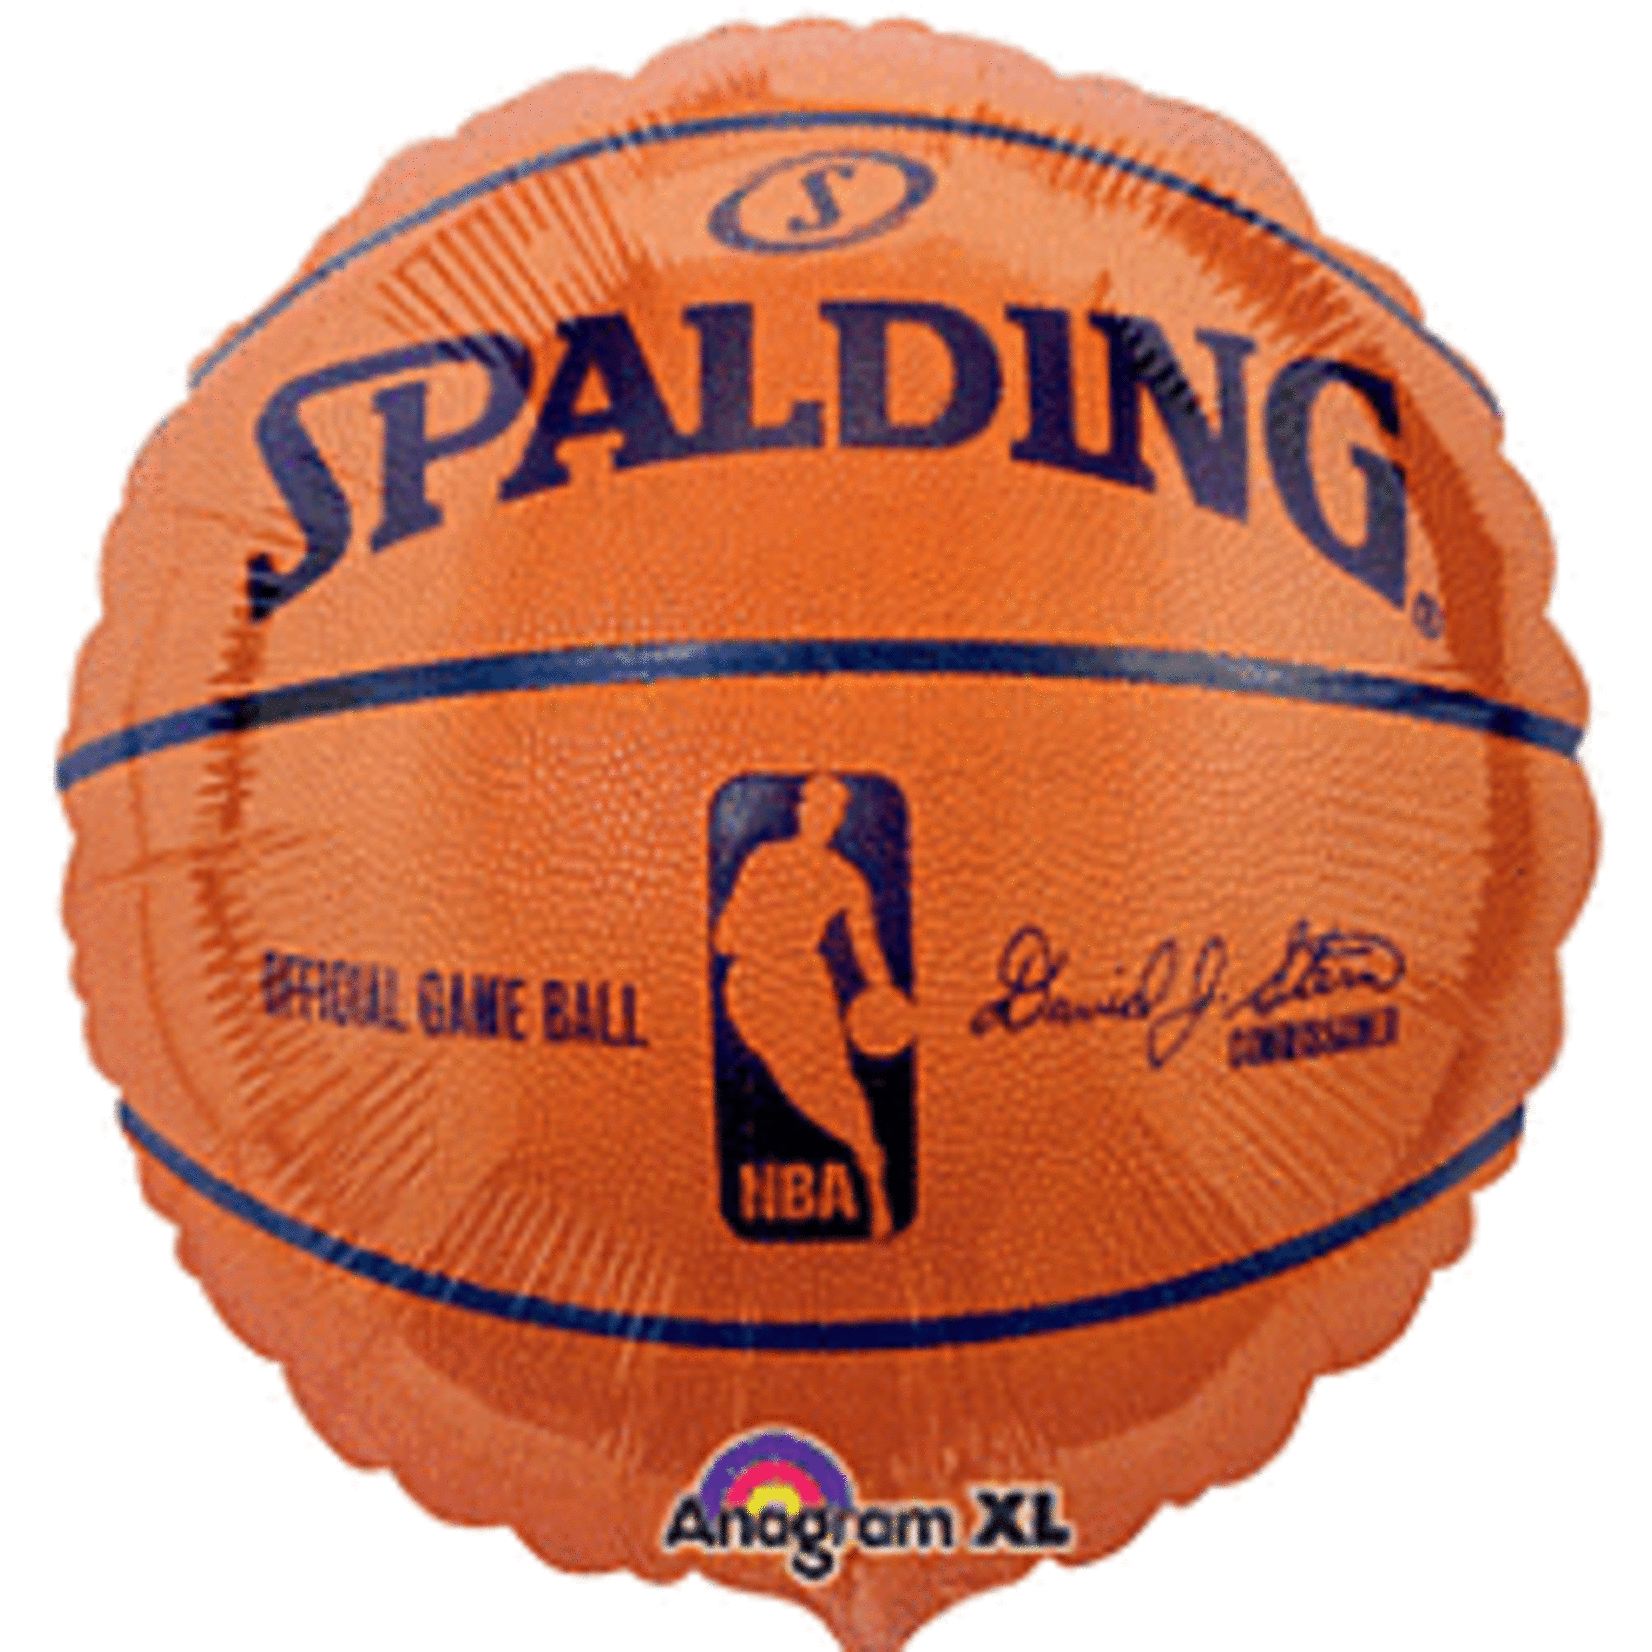 Anagram 18" Spalding Basketball Balloon